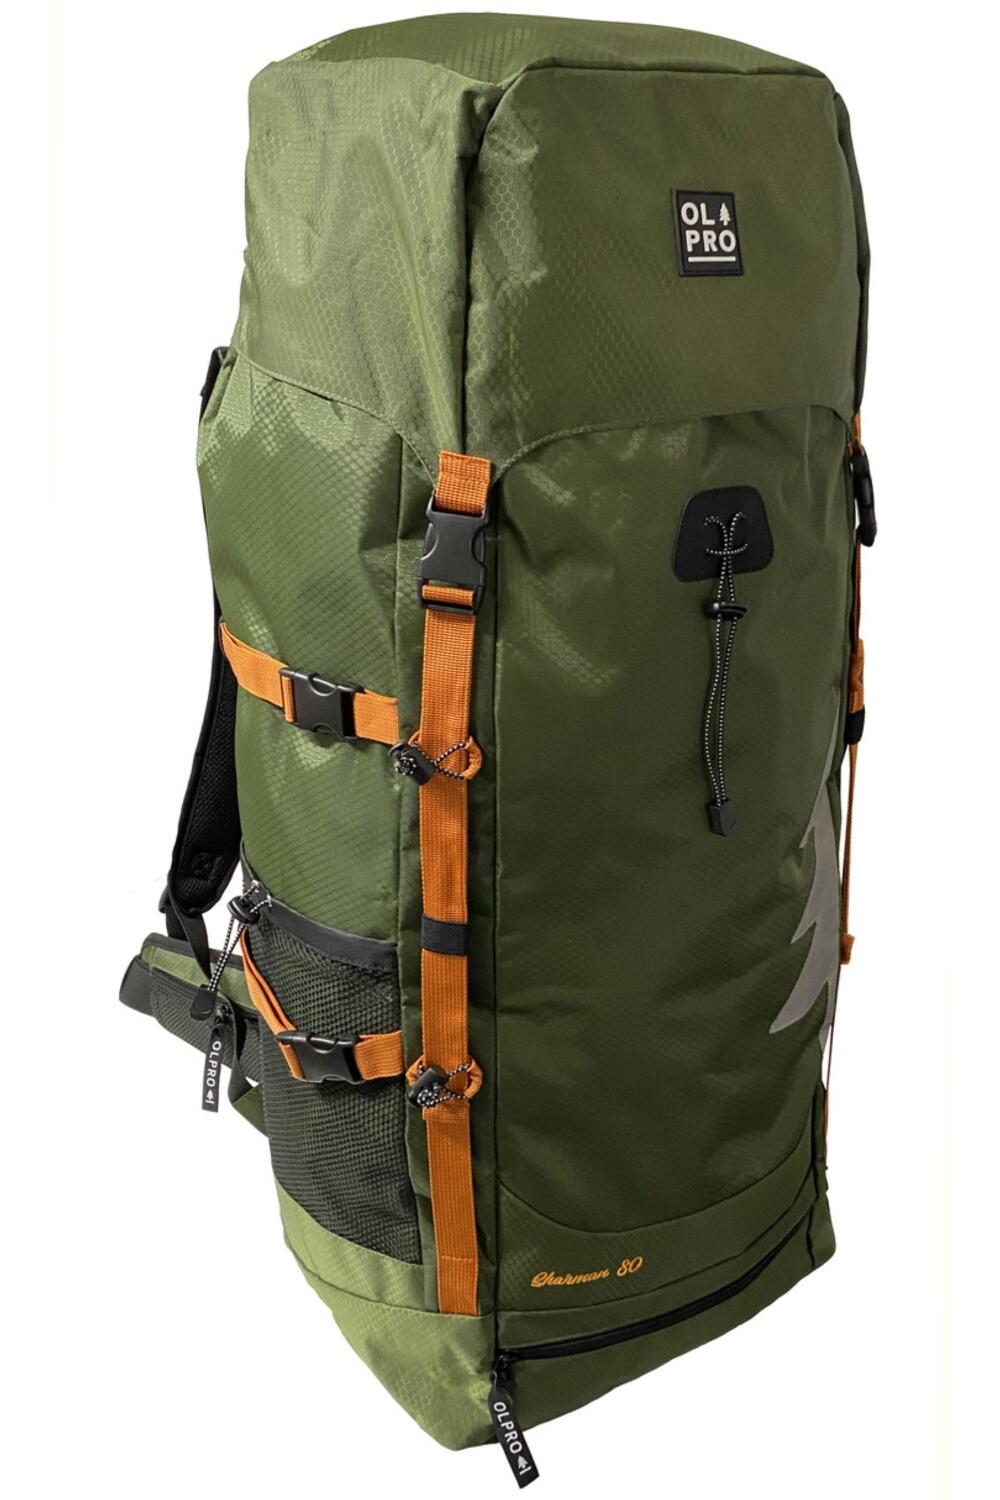 OLPRO 80L Rucksack Bag Green 1/5